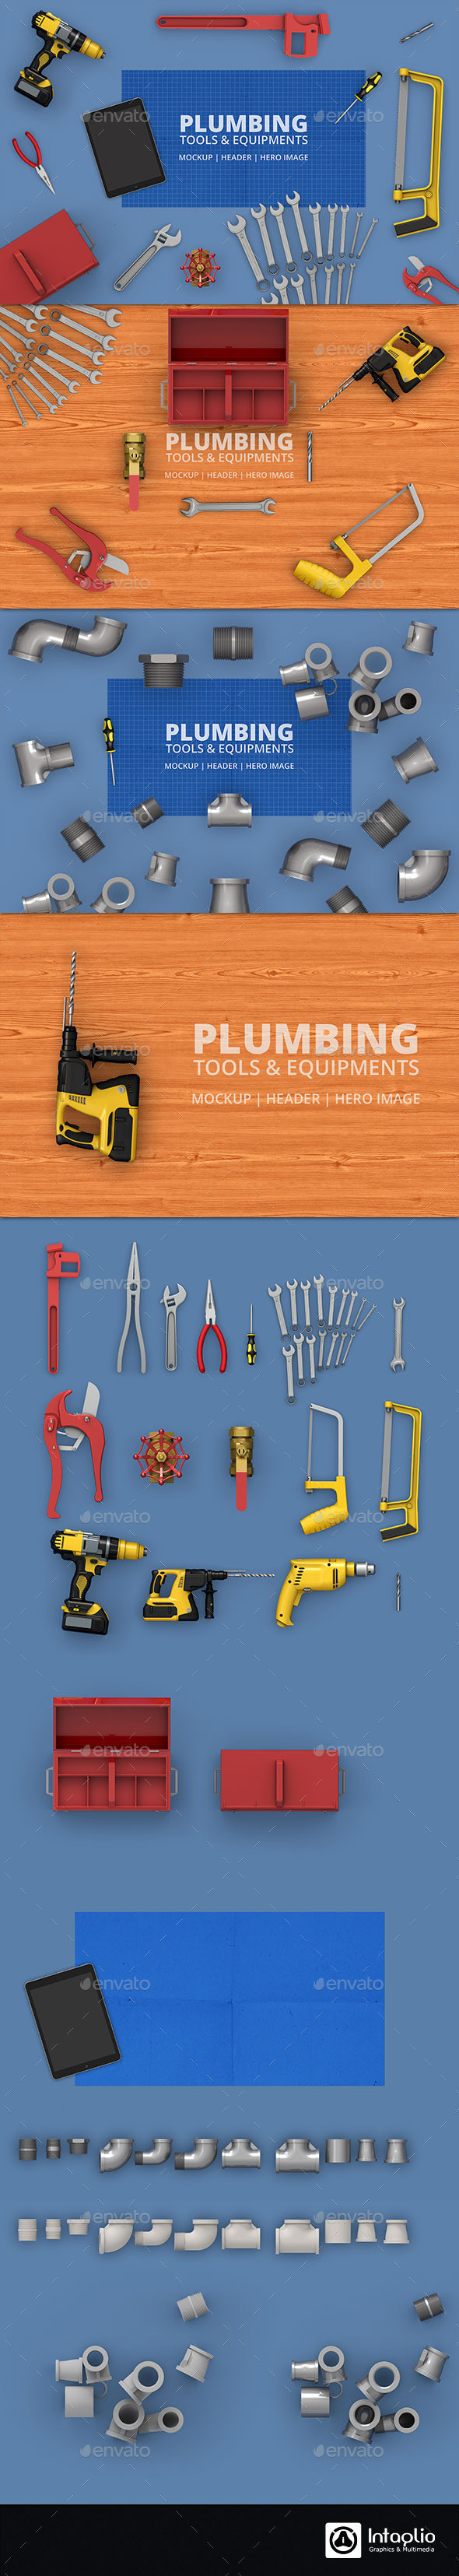 Plumbing tools equipments mockup header hero image preview